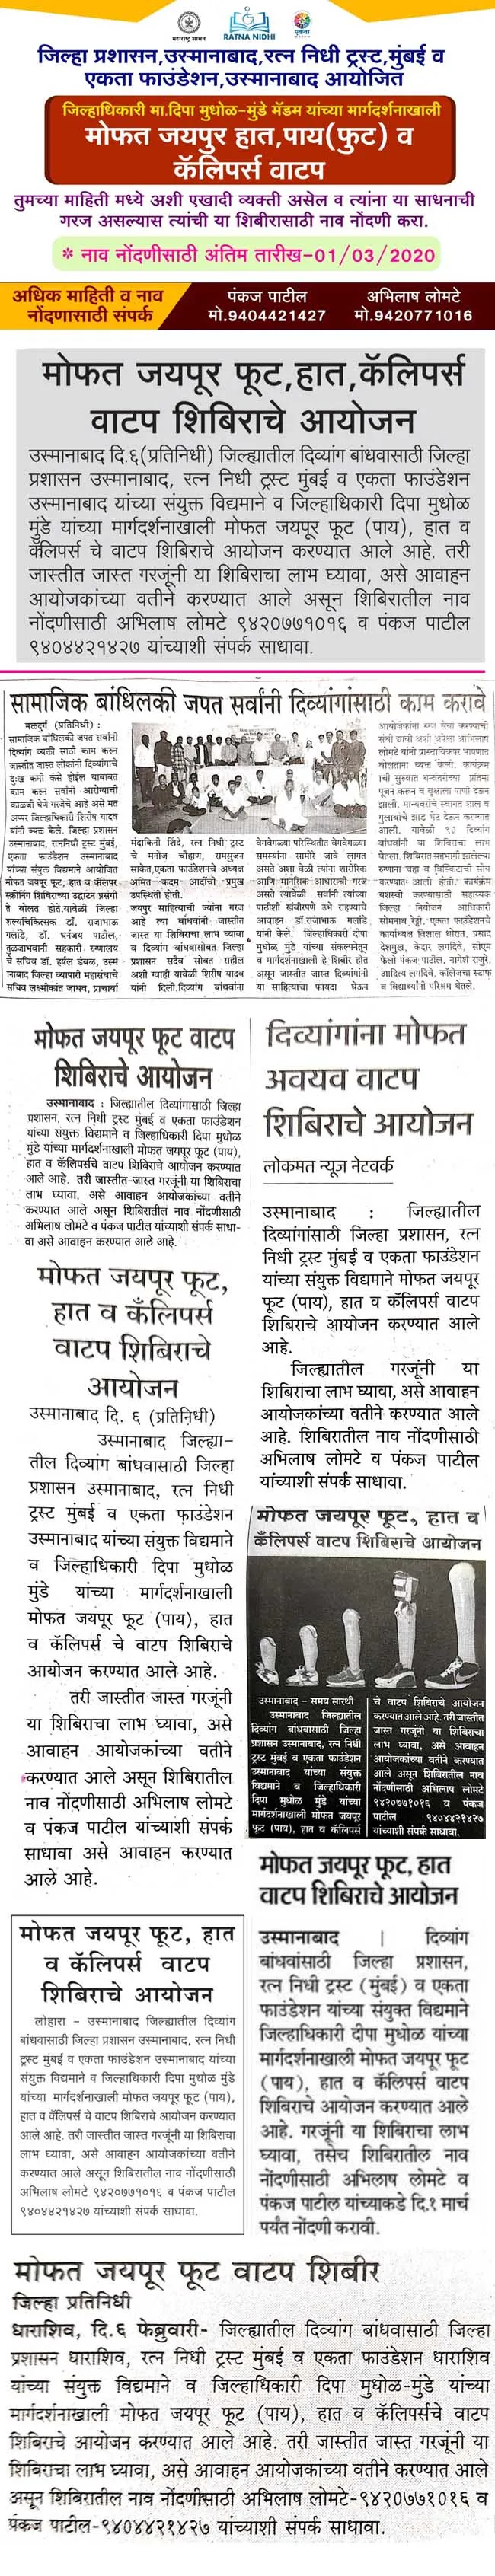 Ratna Nidhi Charitable Trust Article in Dainik Bhaskar News Paper